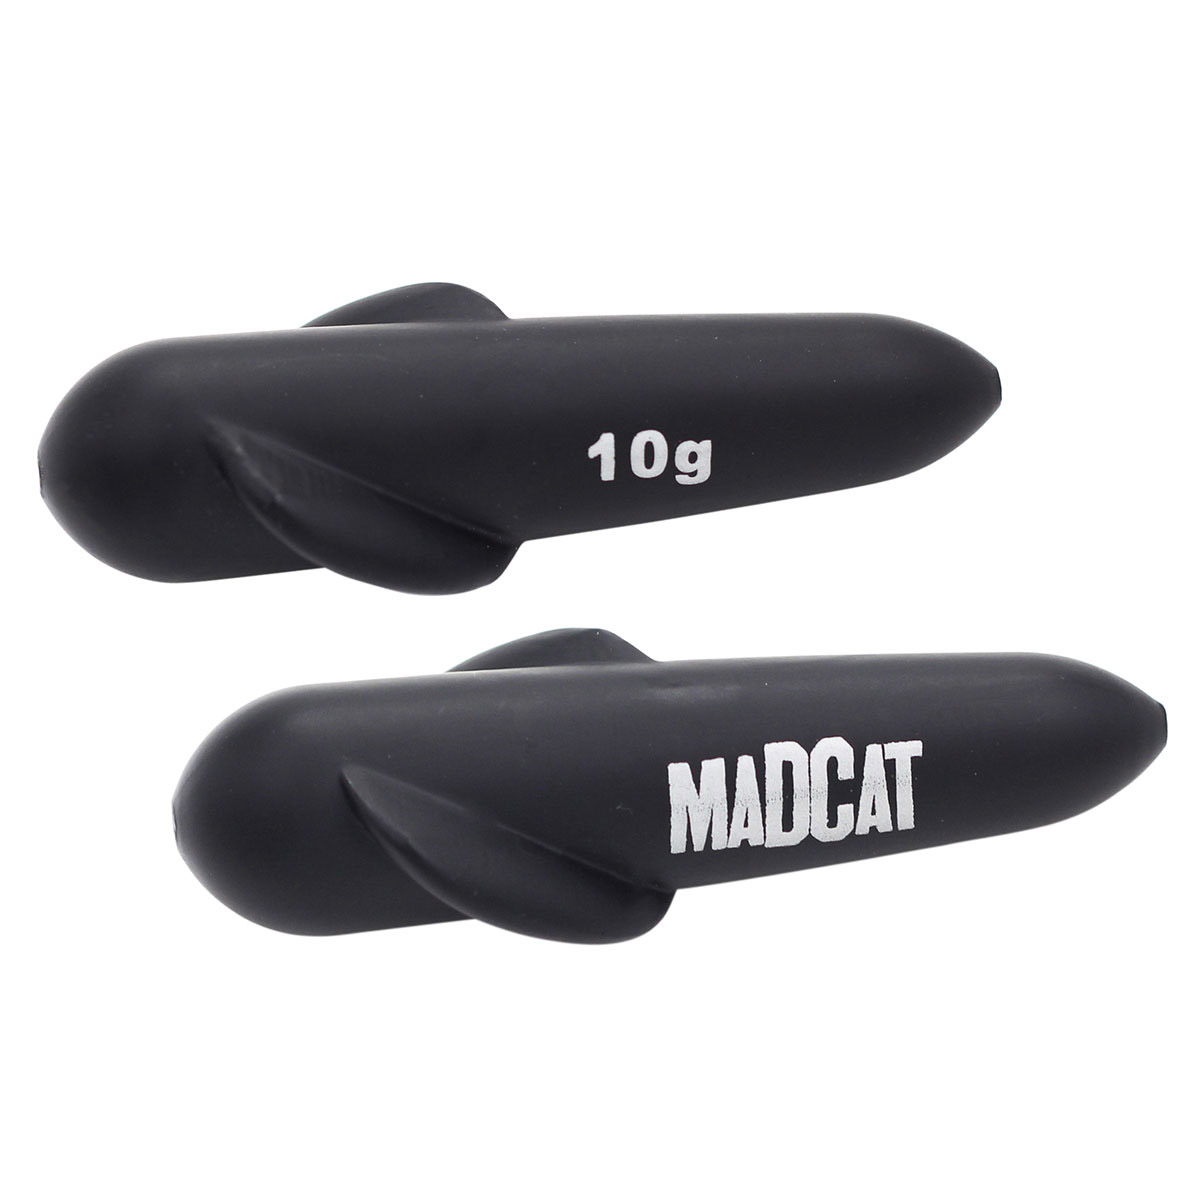 Madcat Propellor Subfloat -  20 gram -  30 gram -  40 gram -  10 gram